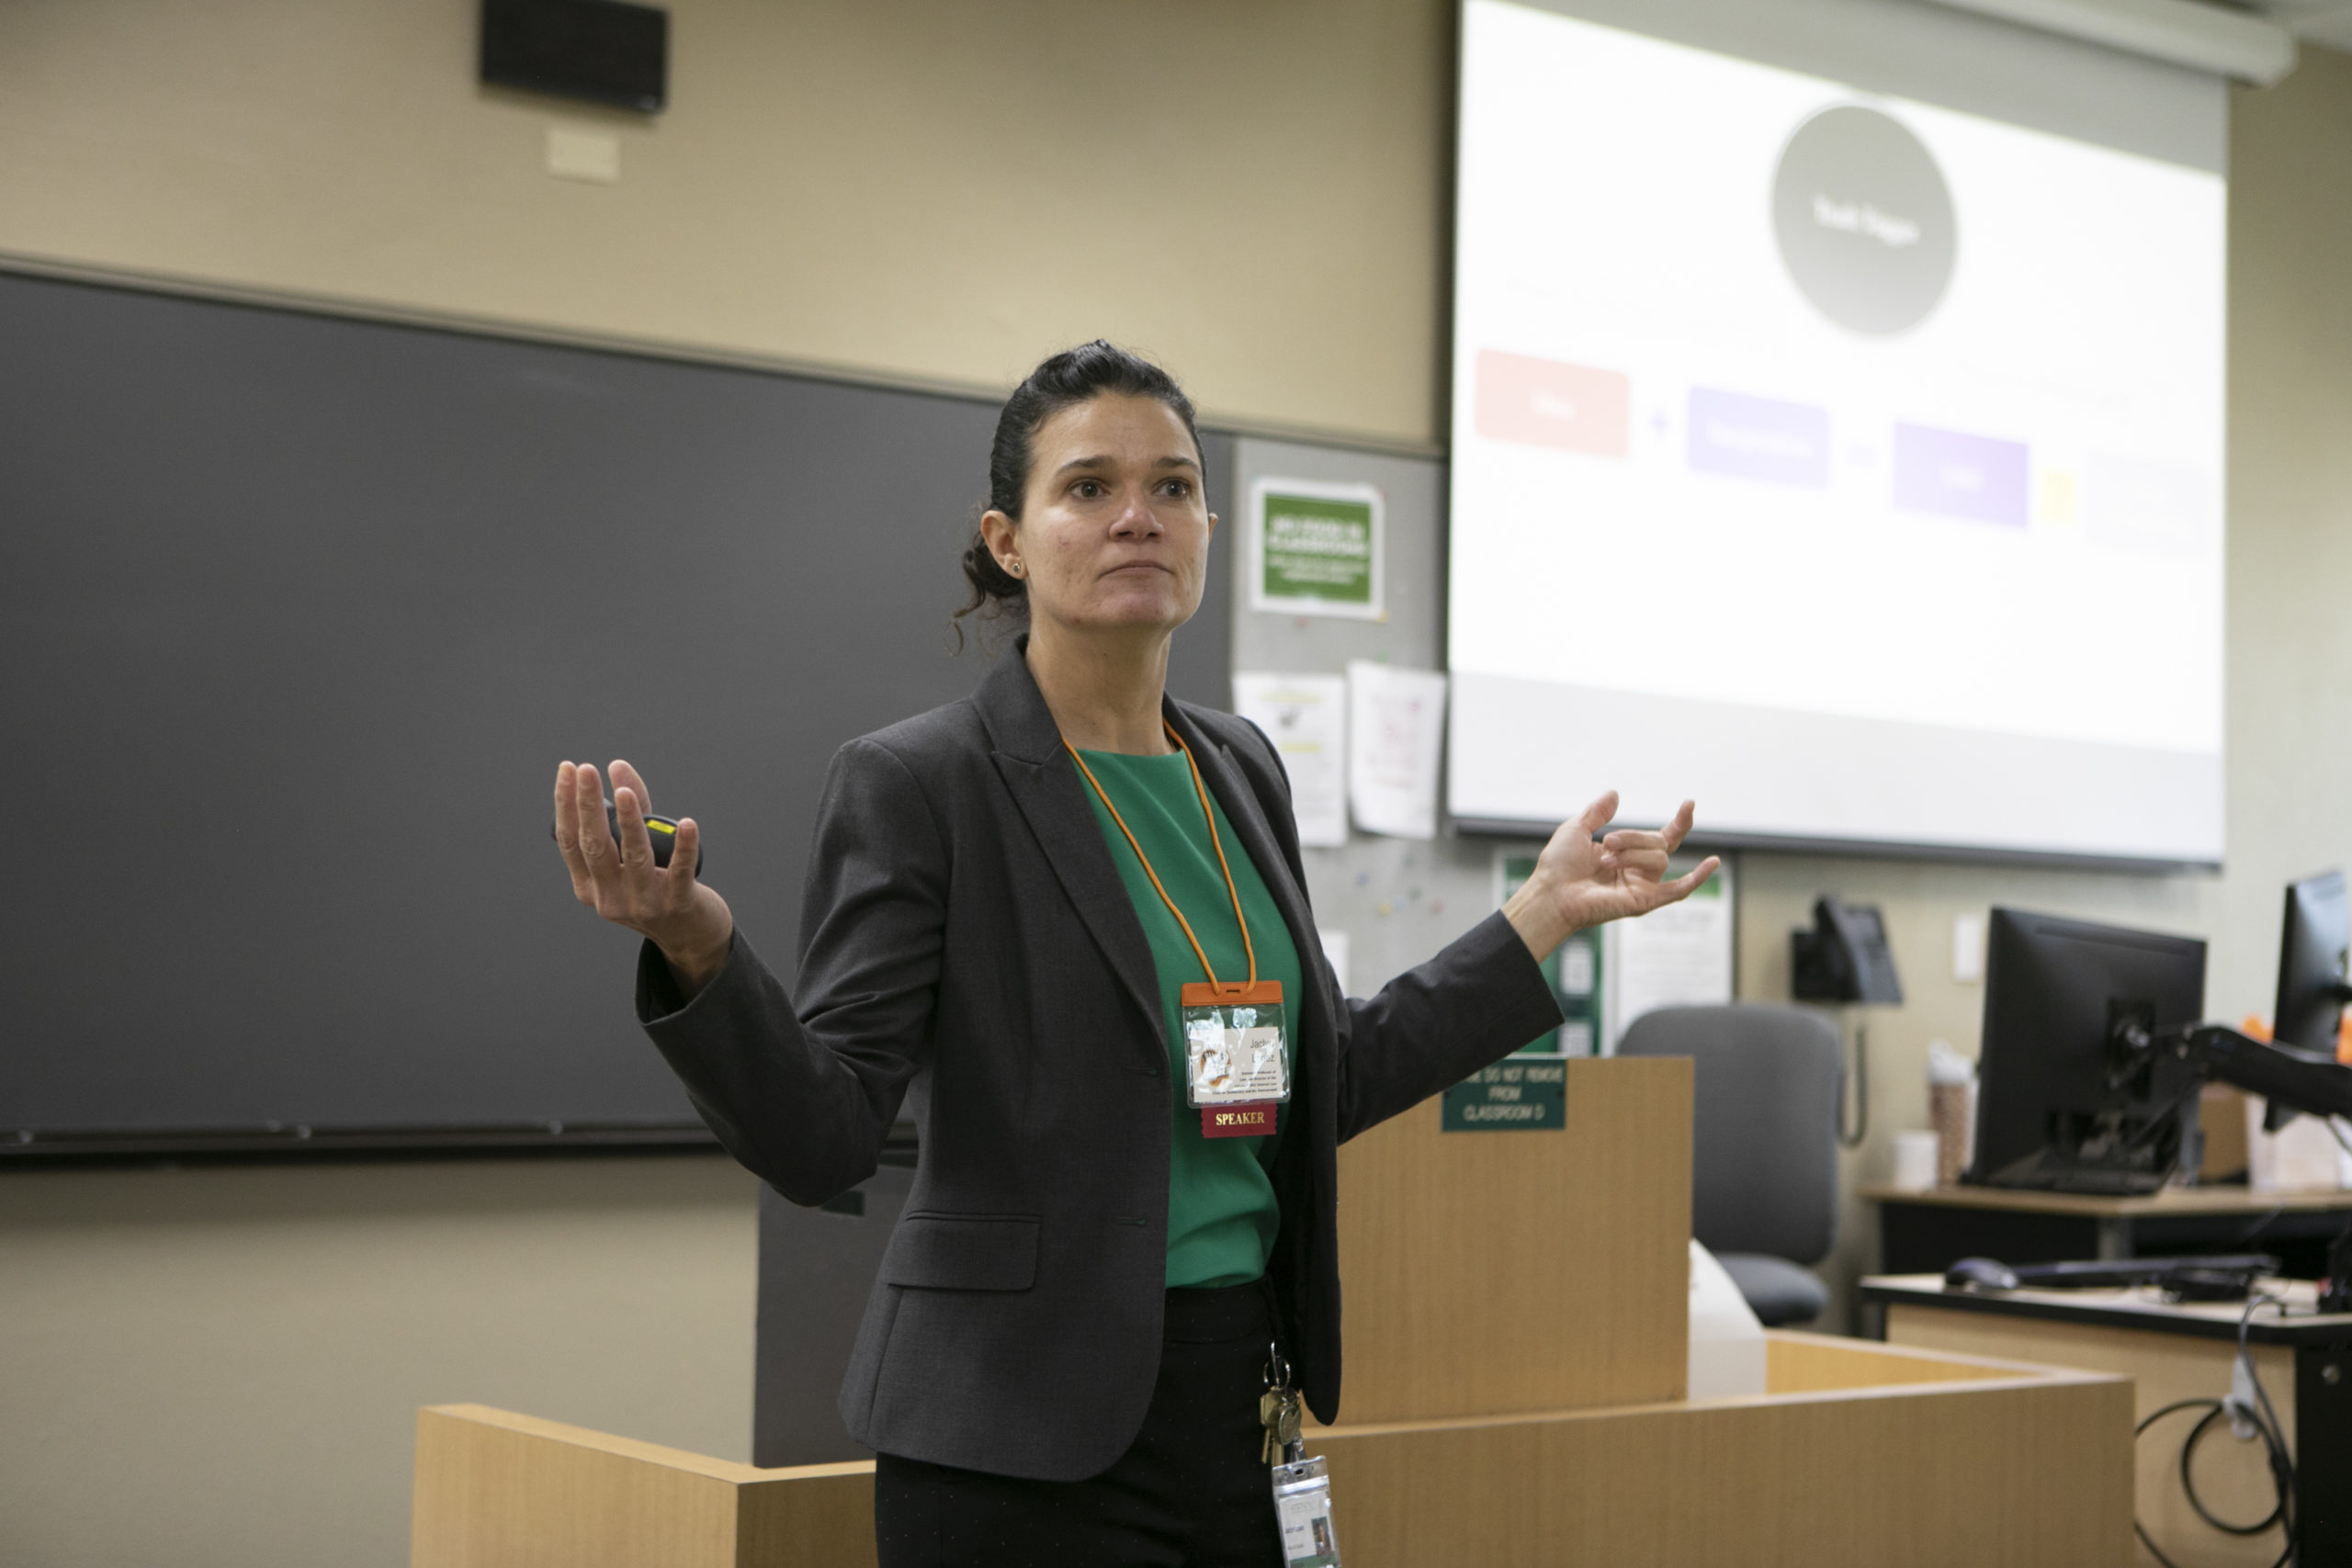 A female law professor in a green shirt addresses a classroom.